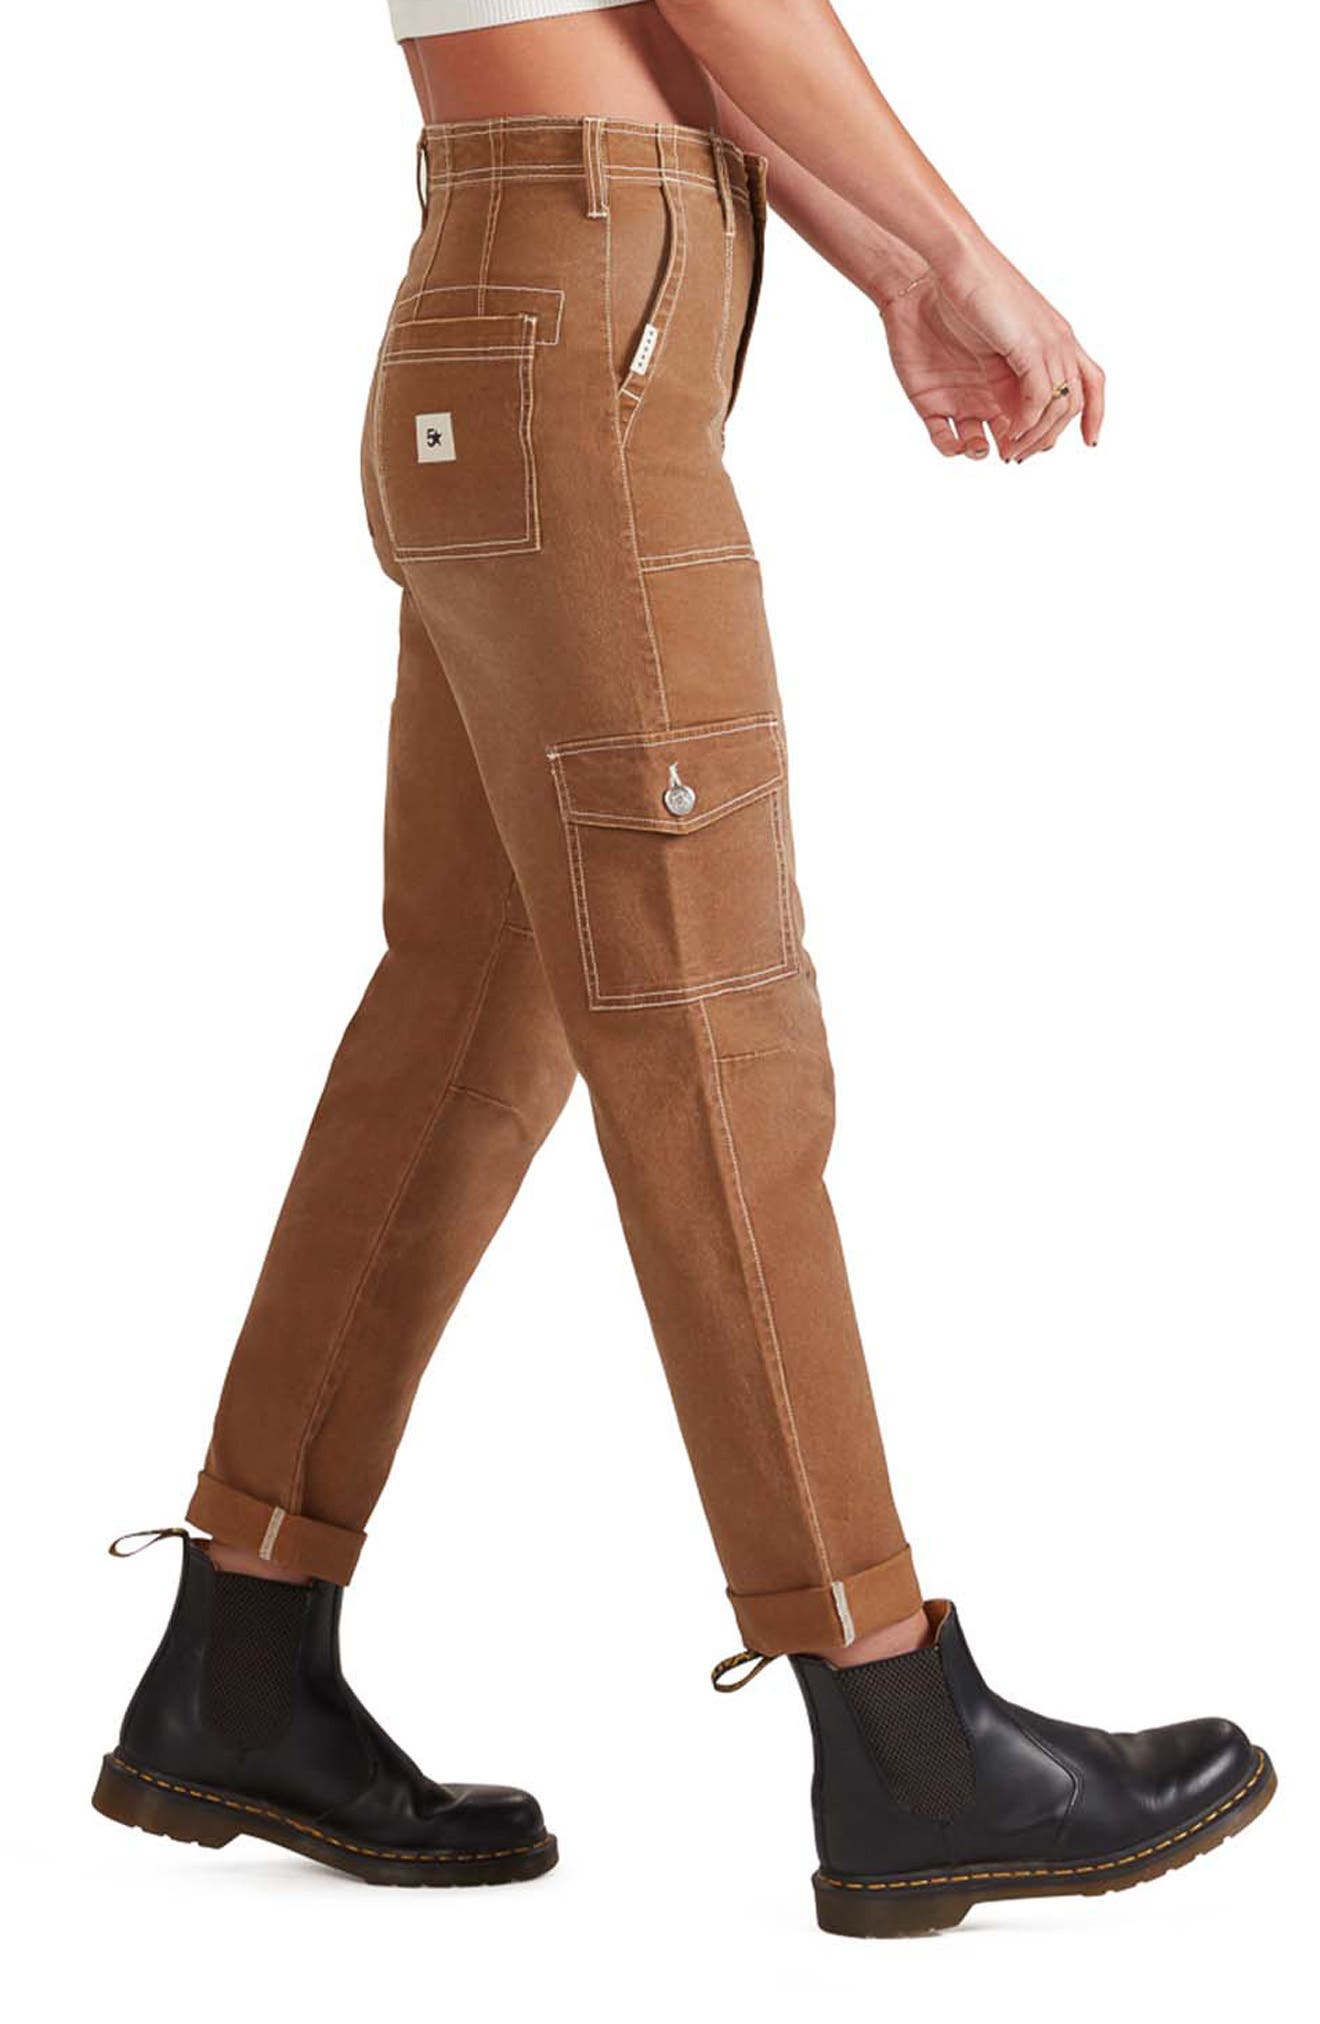 DressInn Boys Clothing Pants Cargo Pants B-1020-sho500 Cargo Shorts Yellow 11-12 Years Boy 